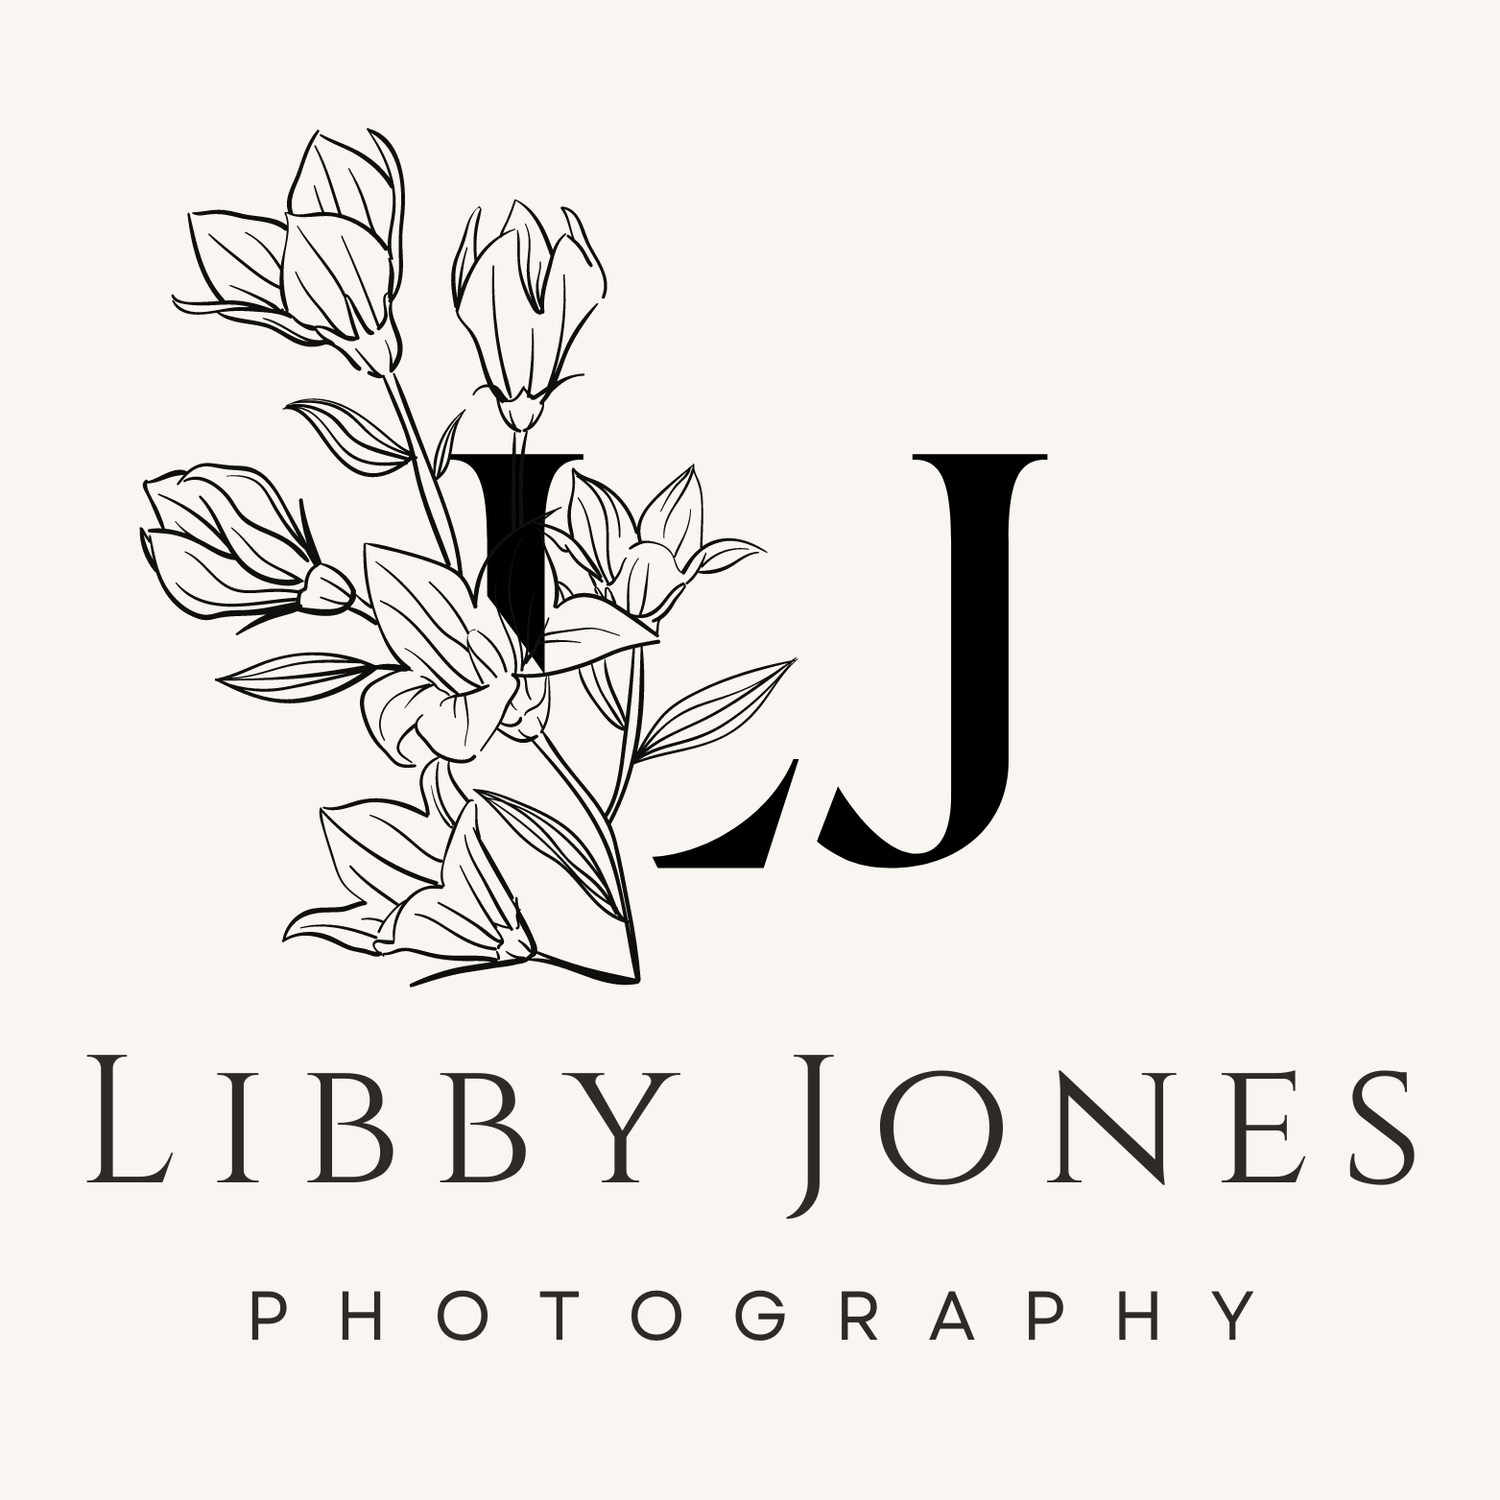 Libby Jones Photography